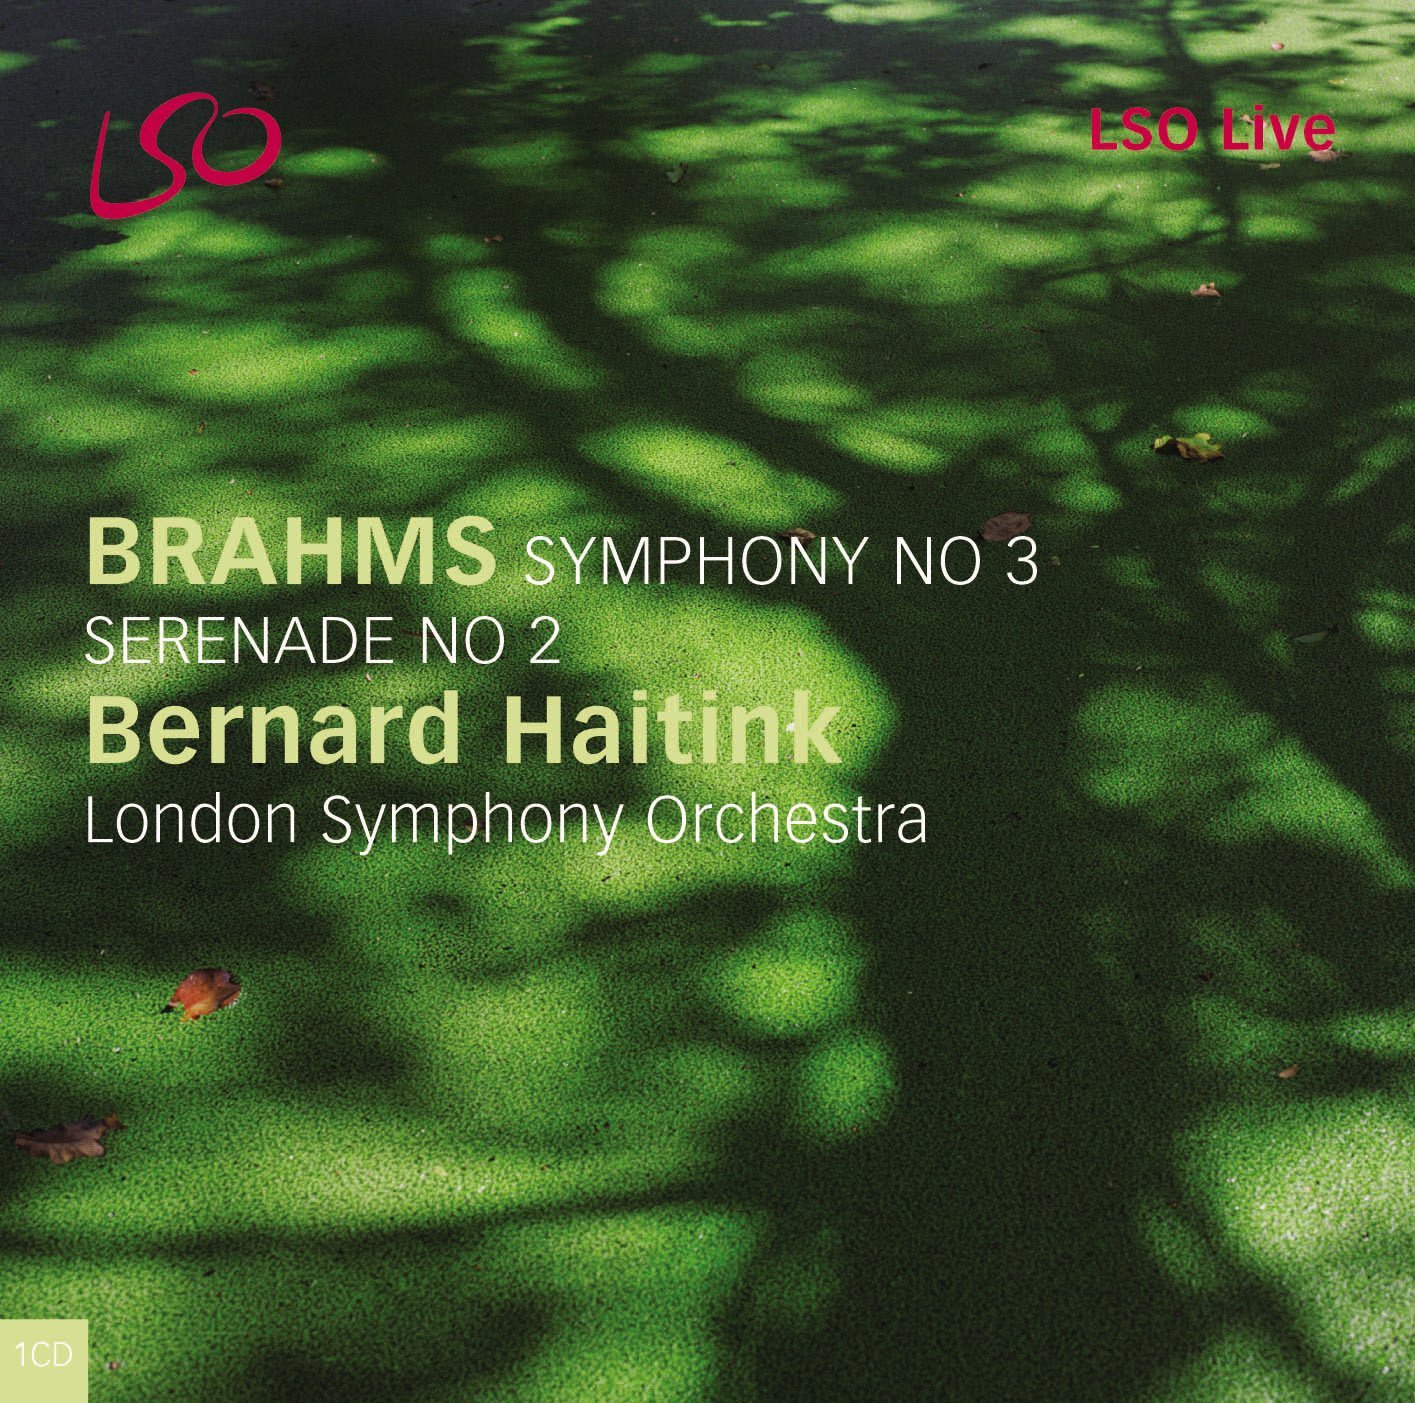 Brahms - Symphony No 3; Serenade No 2 | London Symphony Orchestra, Johannes Brahms, Bernard Haitink